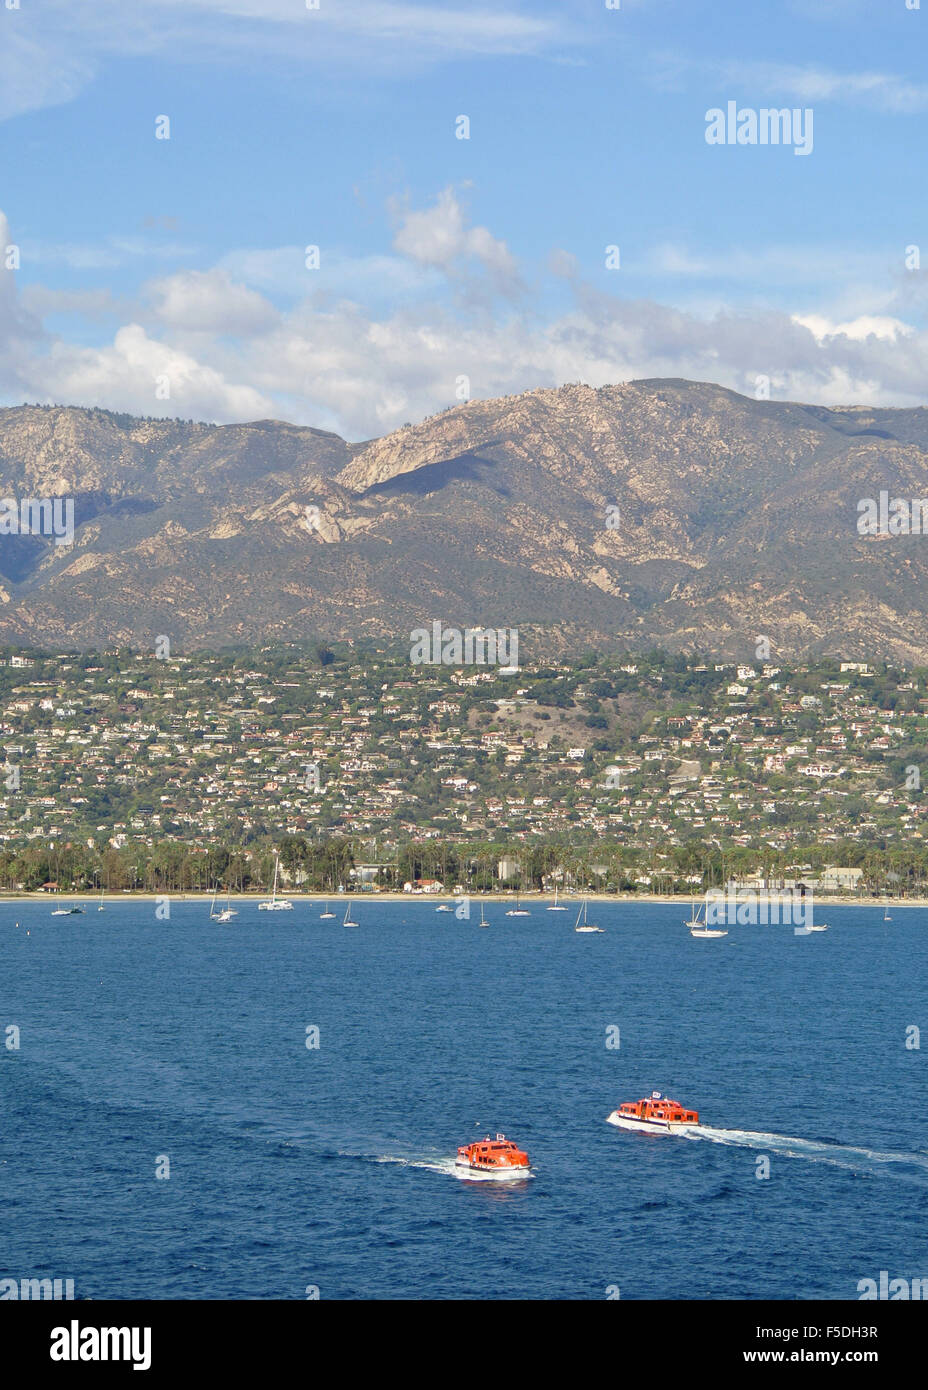 lifeboat tenders take princess cruise ship passengers on shore excursions off santa barbara coast in southern california Stock Photo